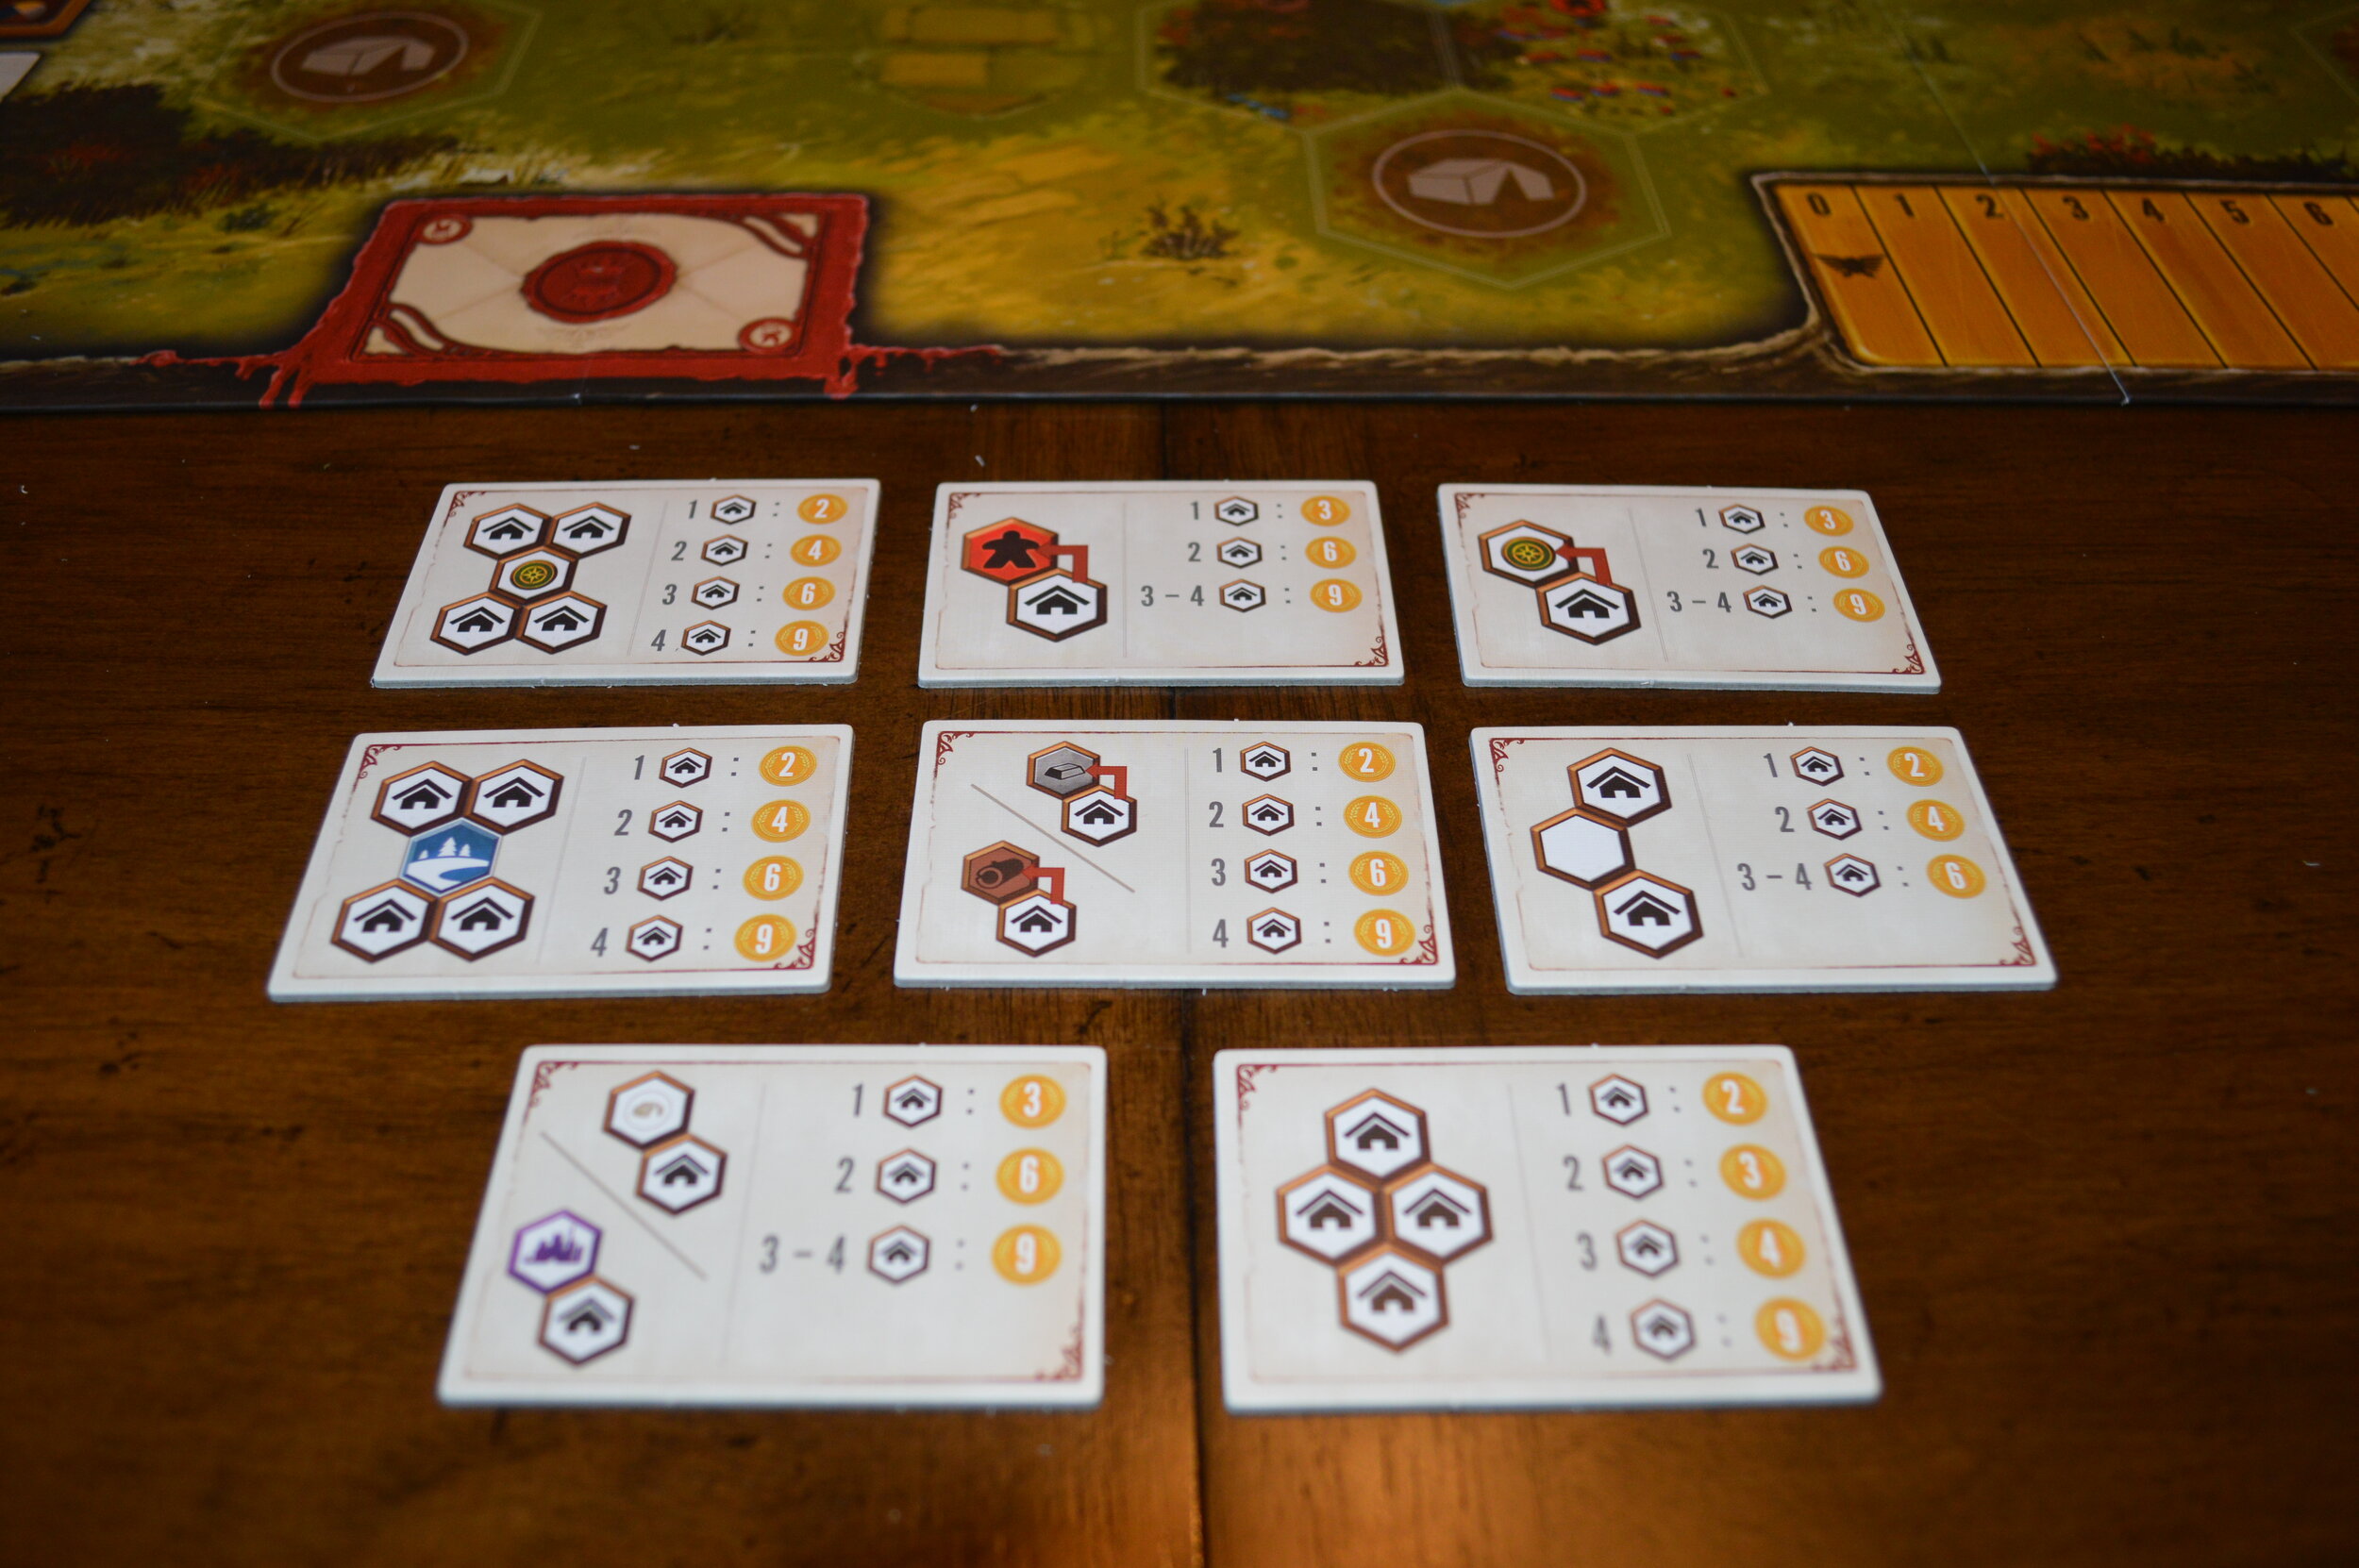 Scythe - Modular Board - Ghenos Games